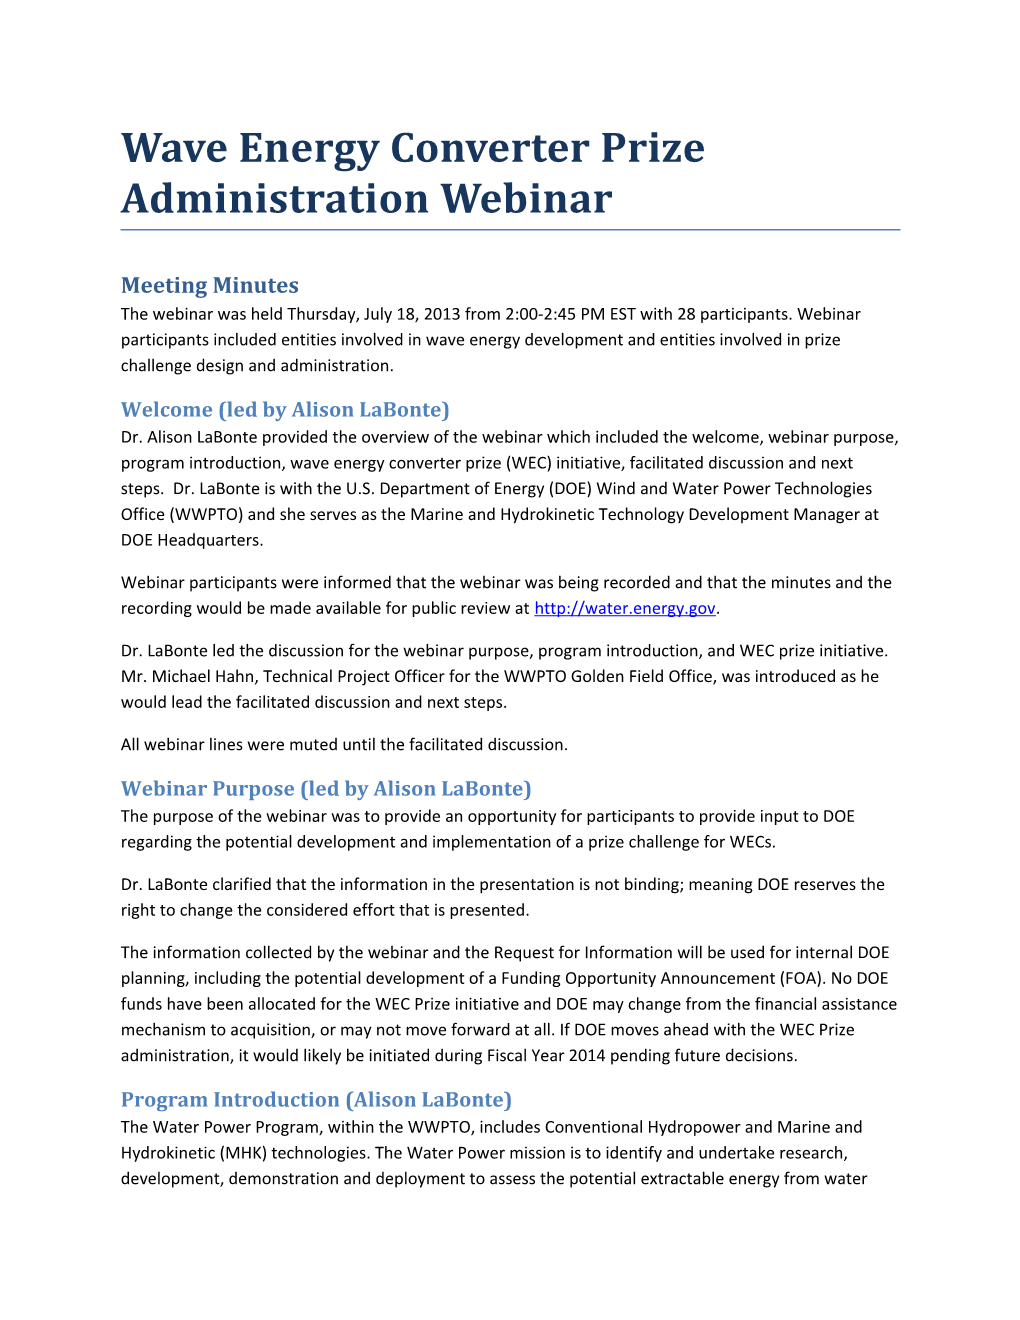 Wave Energy Converter Prize Administration Webinar Minutes